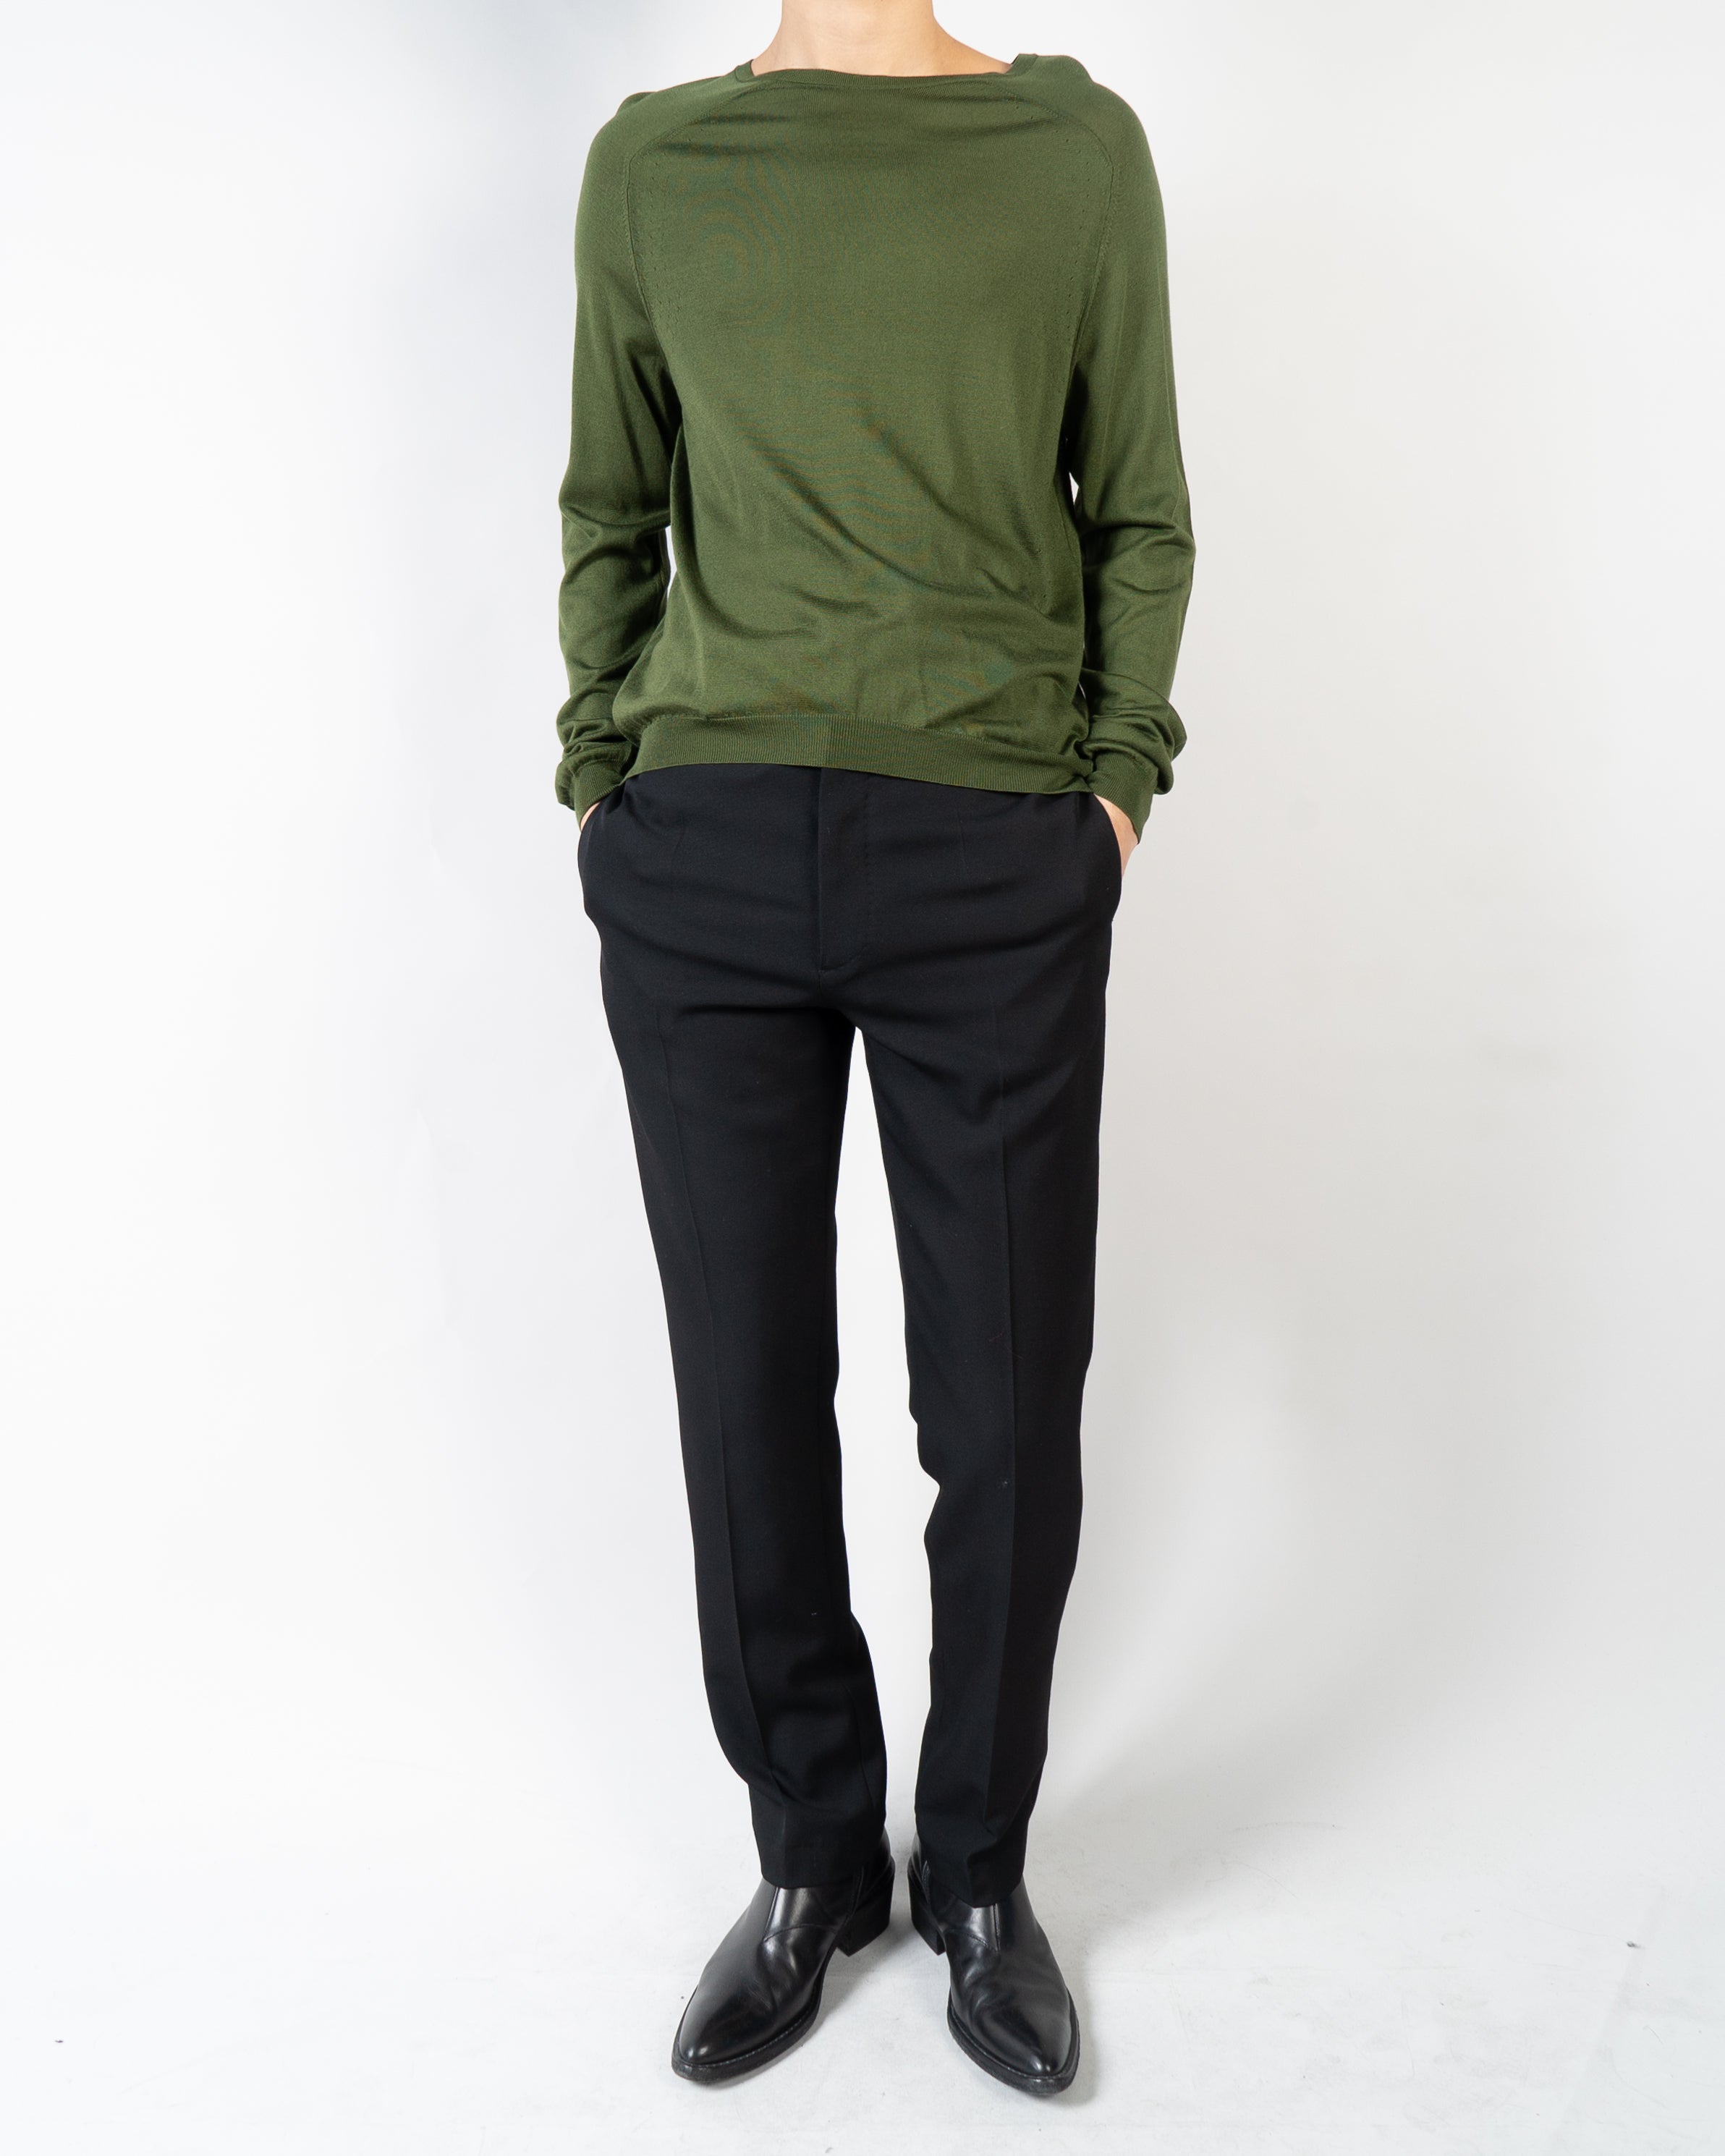 SS20 Green Sweater Sample